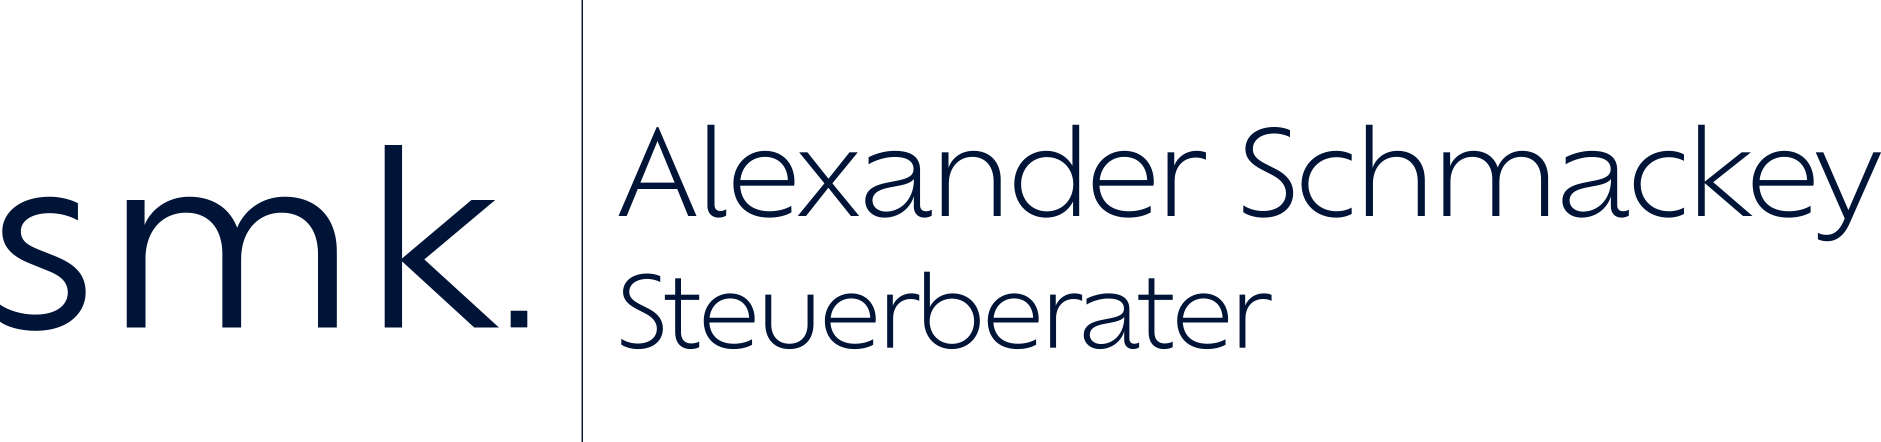 smk. Alexander Schmackey | Steuerberatung Logo